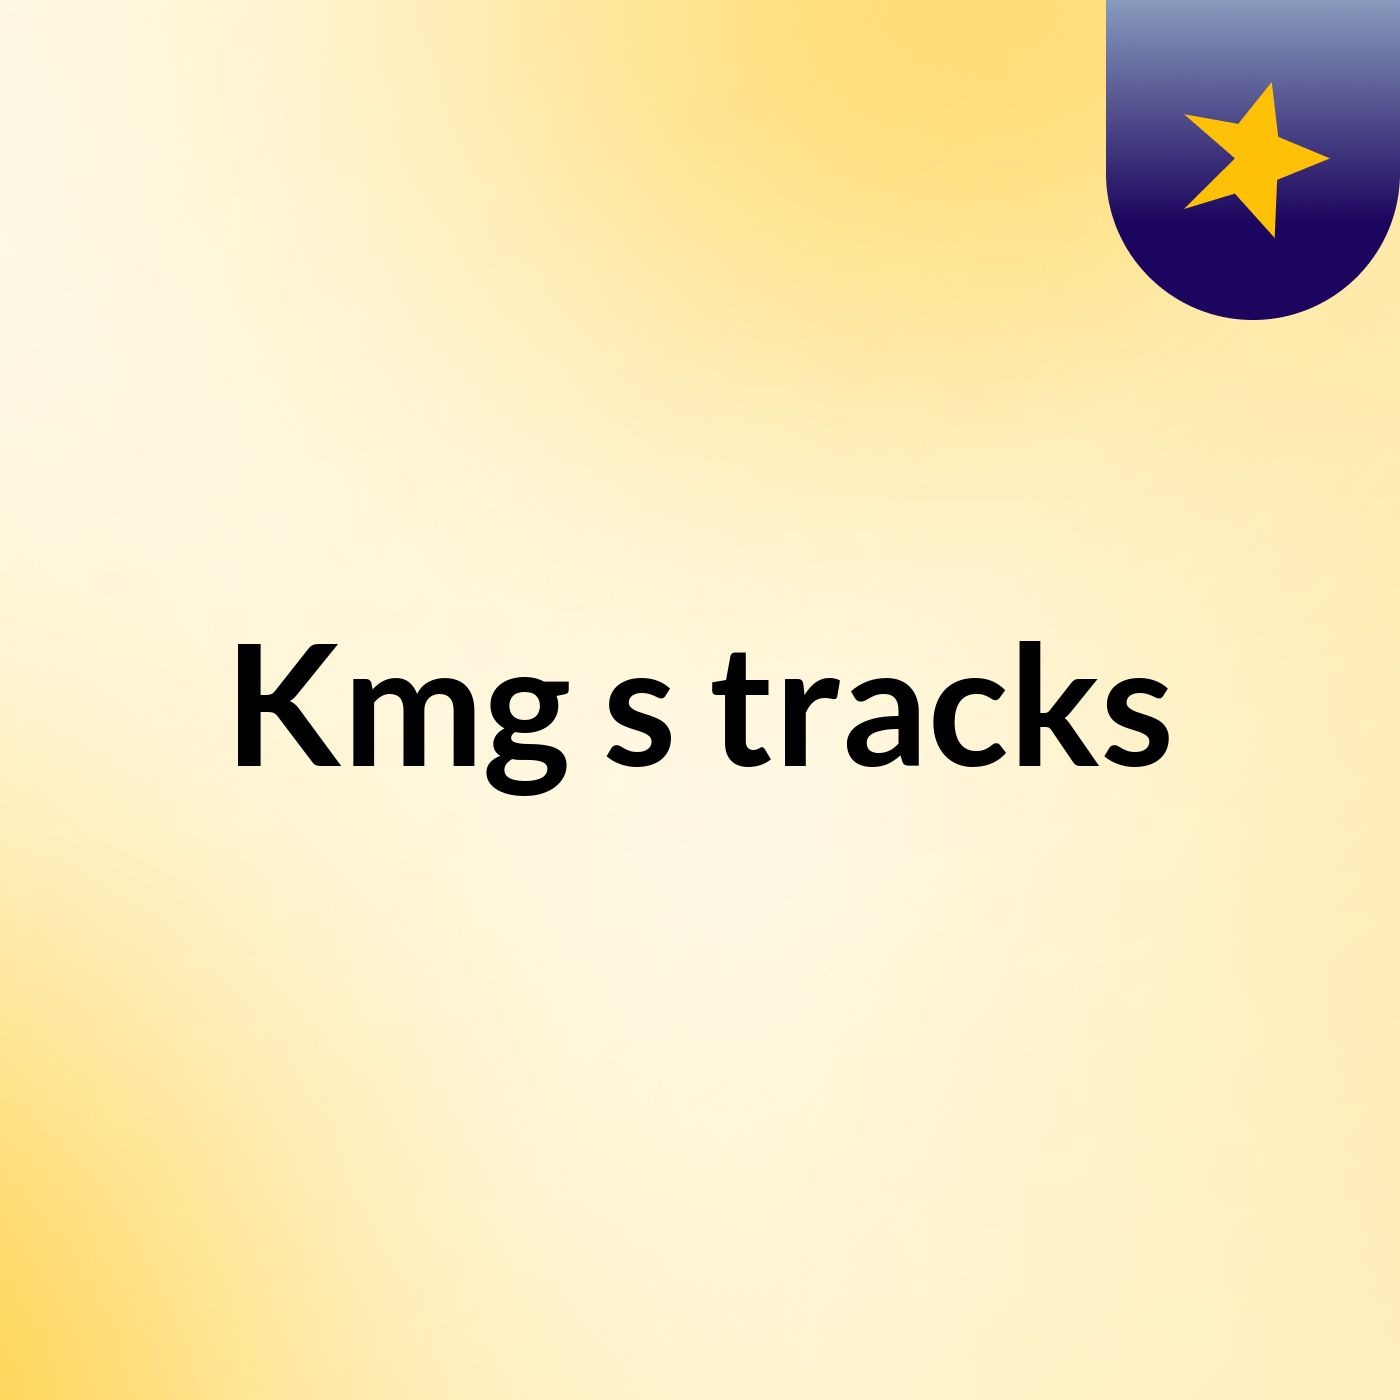 Kmg's tracks